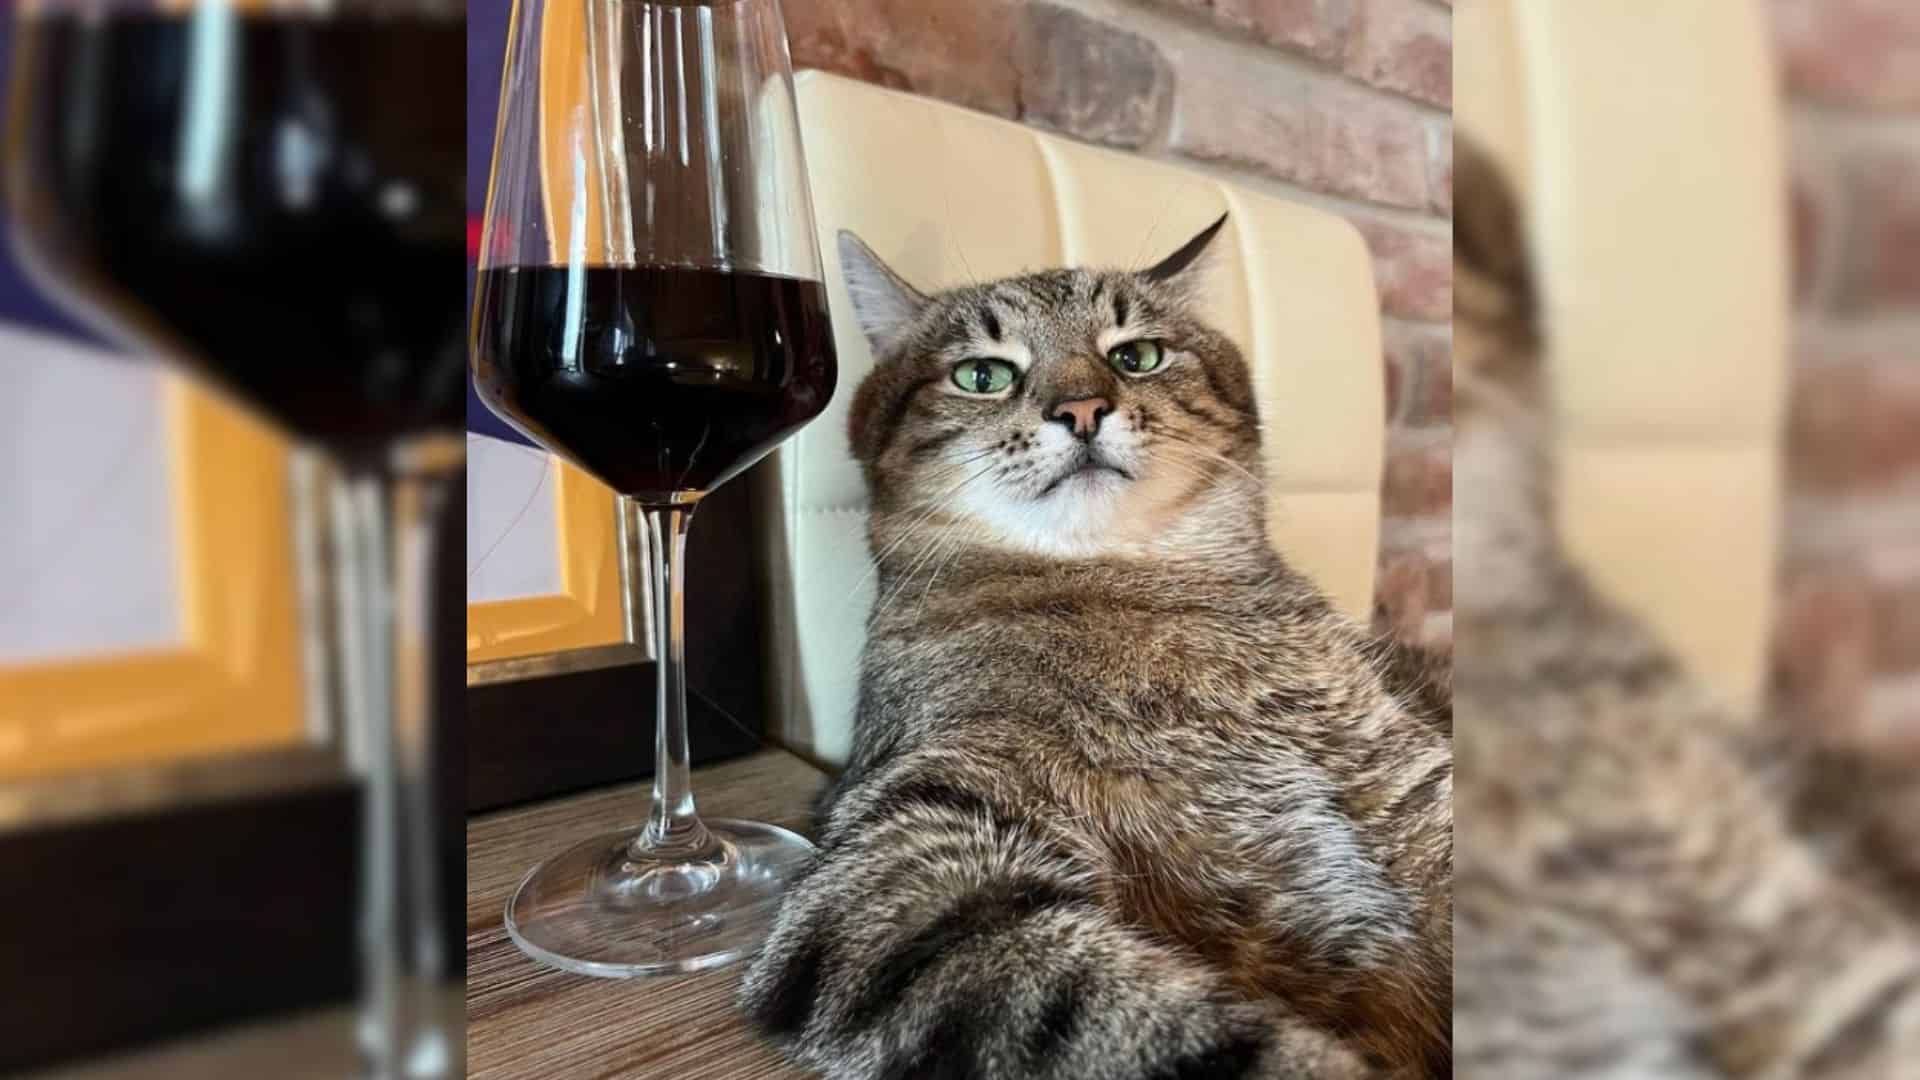 Cat and wine